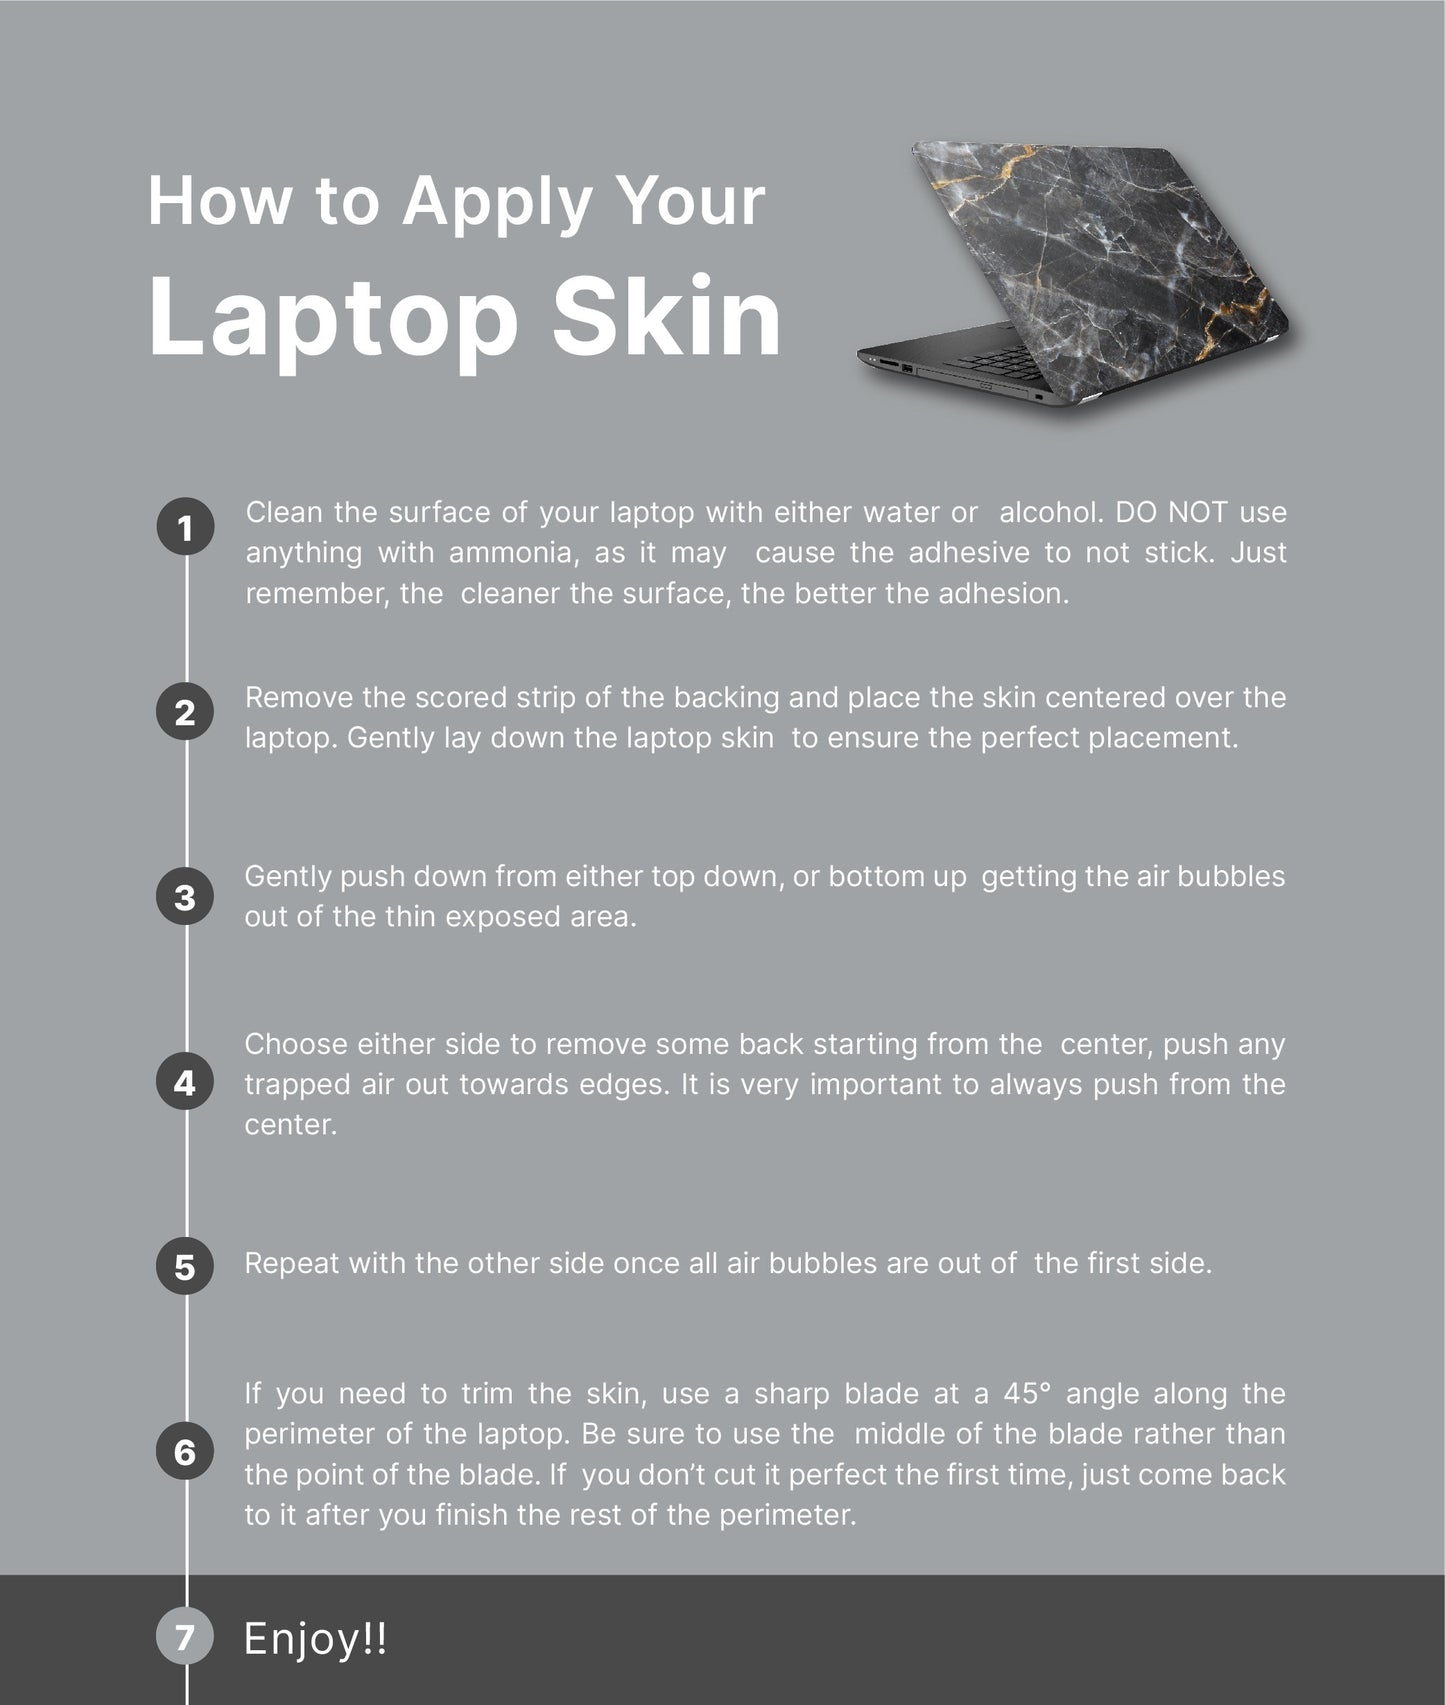 Outline Floral Laptop Skin, Laptop Cover, Laptop Skins, Removable Laptop Skins, Laptop Decal, Customized Laptop Skin, Laptop Stickers 274